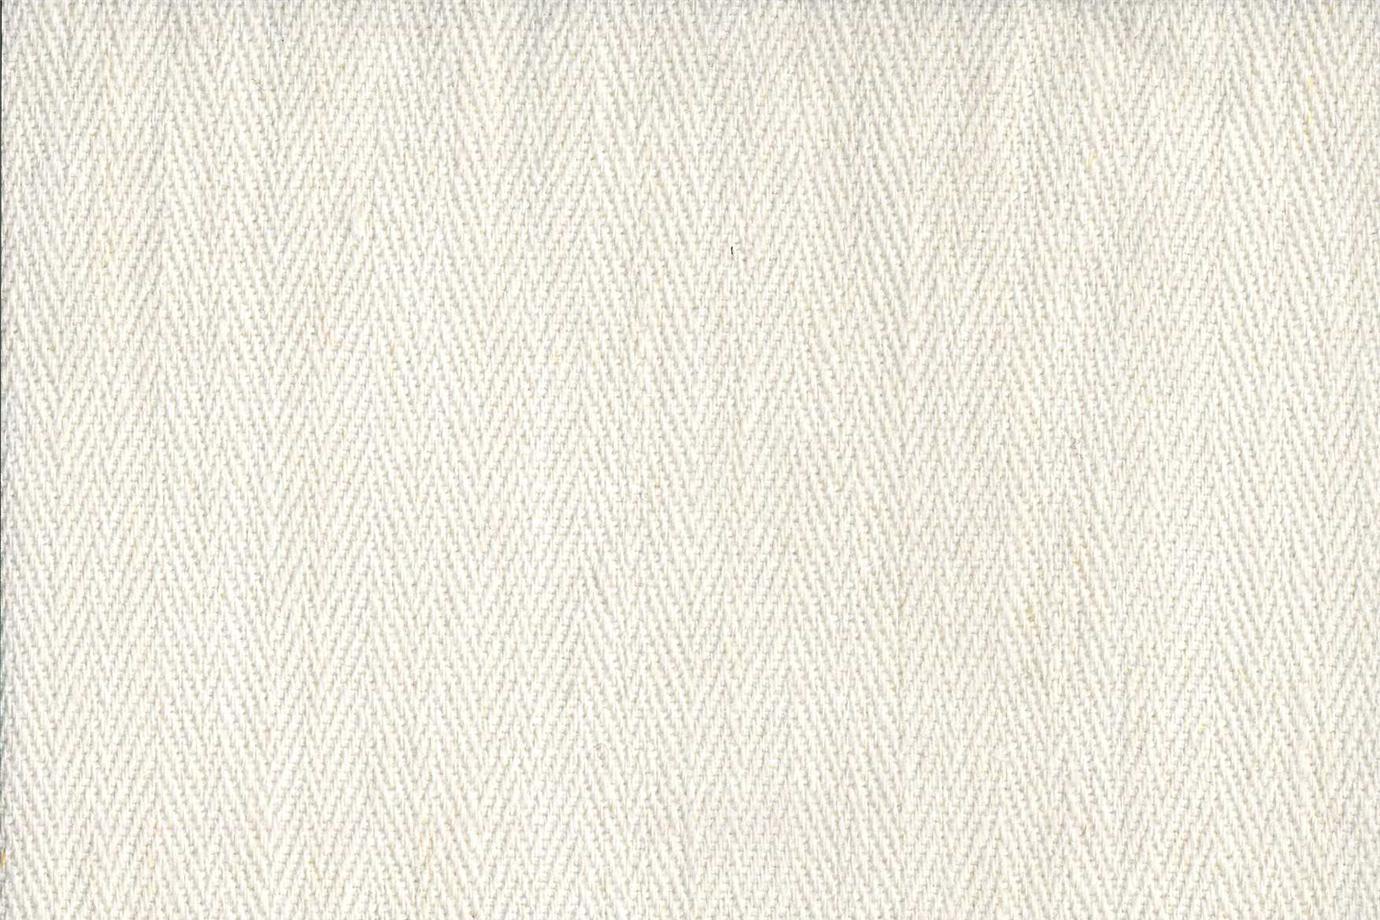 AC077EFS SETTE 001 Bianco home decoration fabric